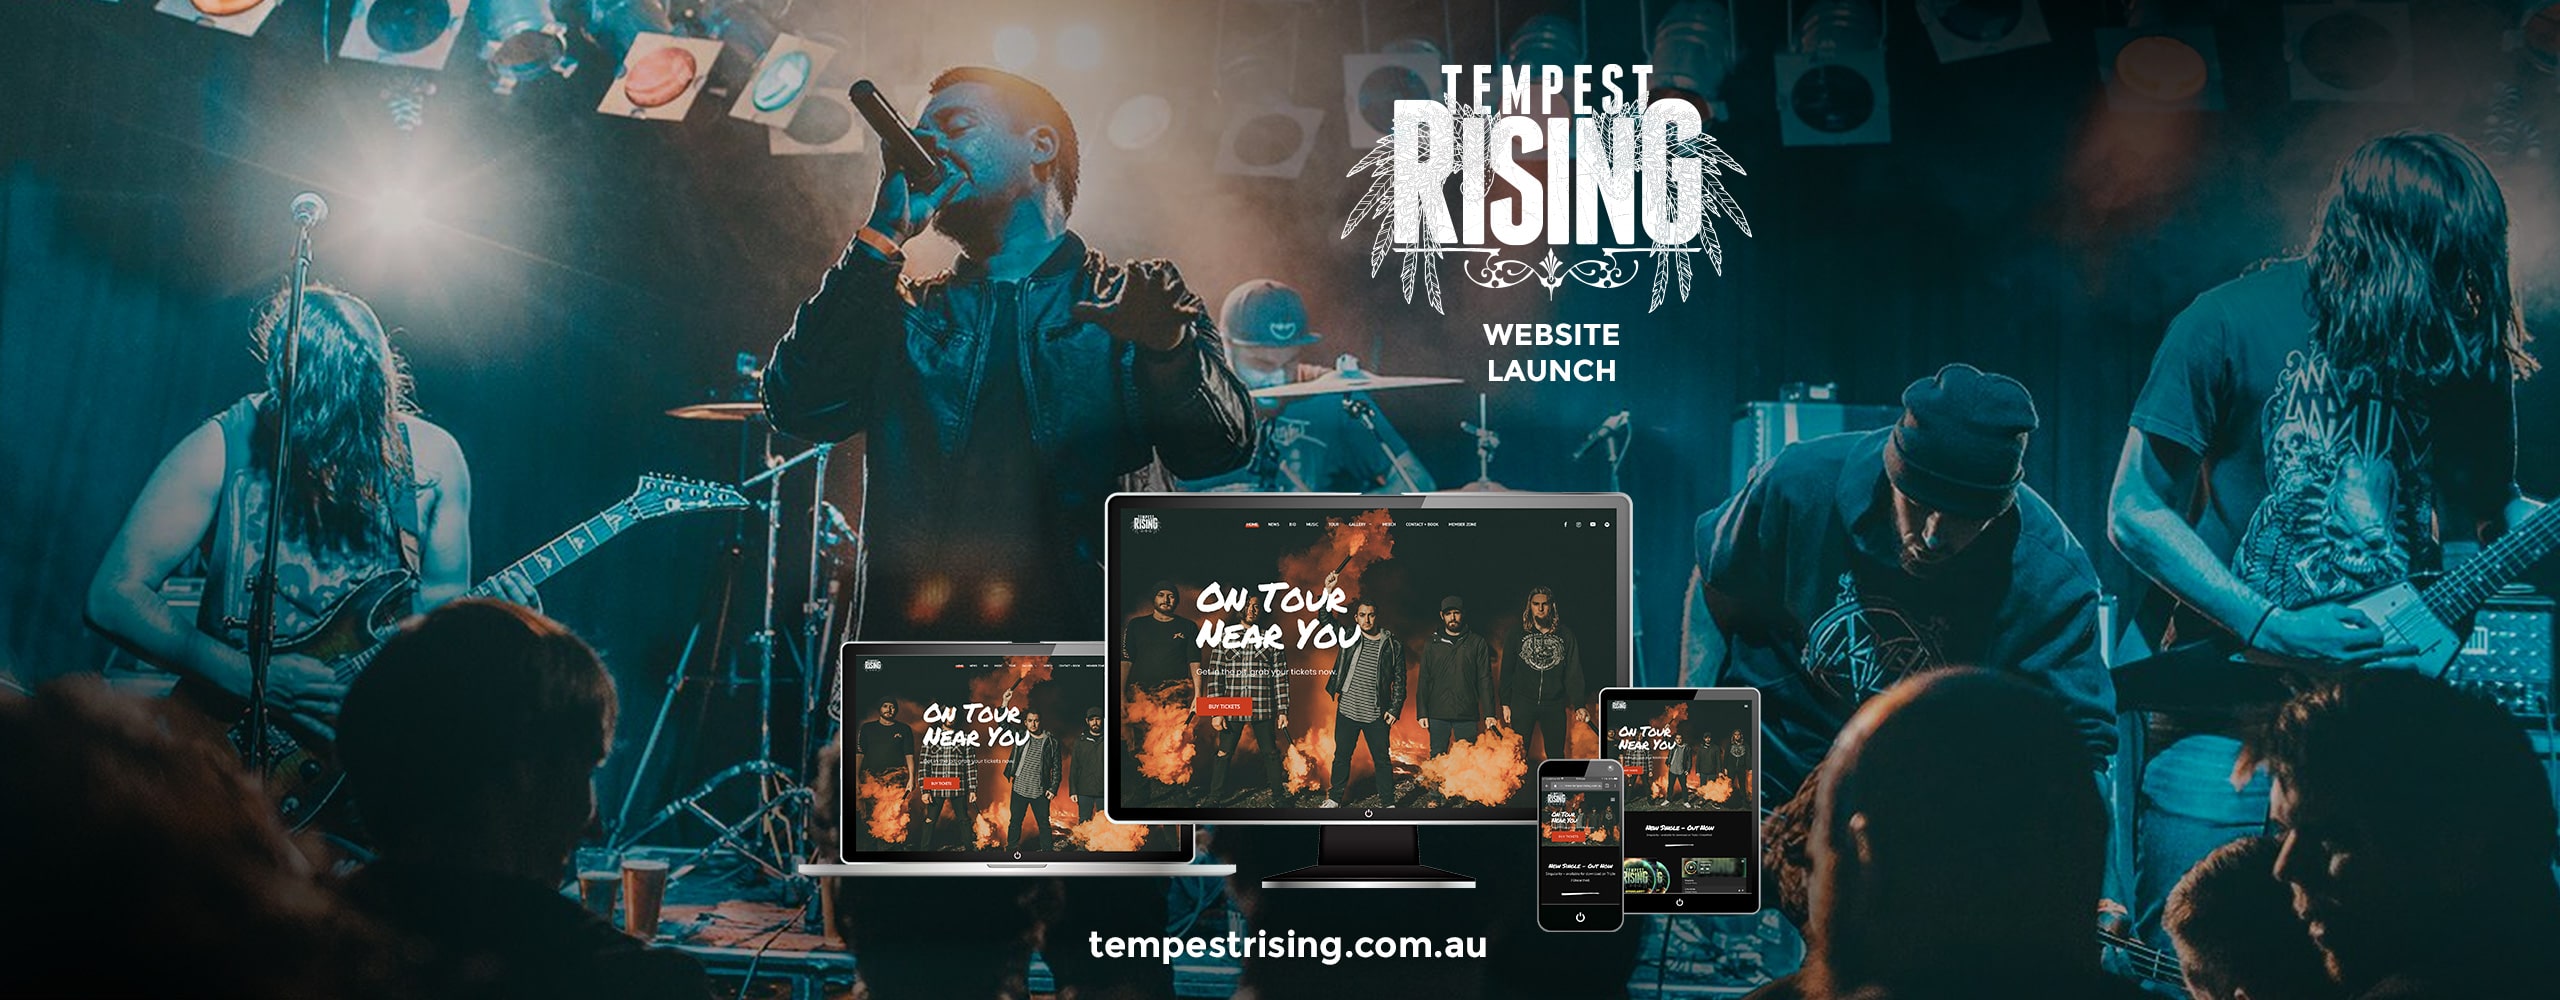 TechTiger: Tempest Rising website launch